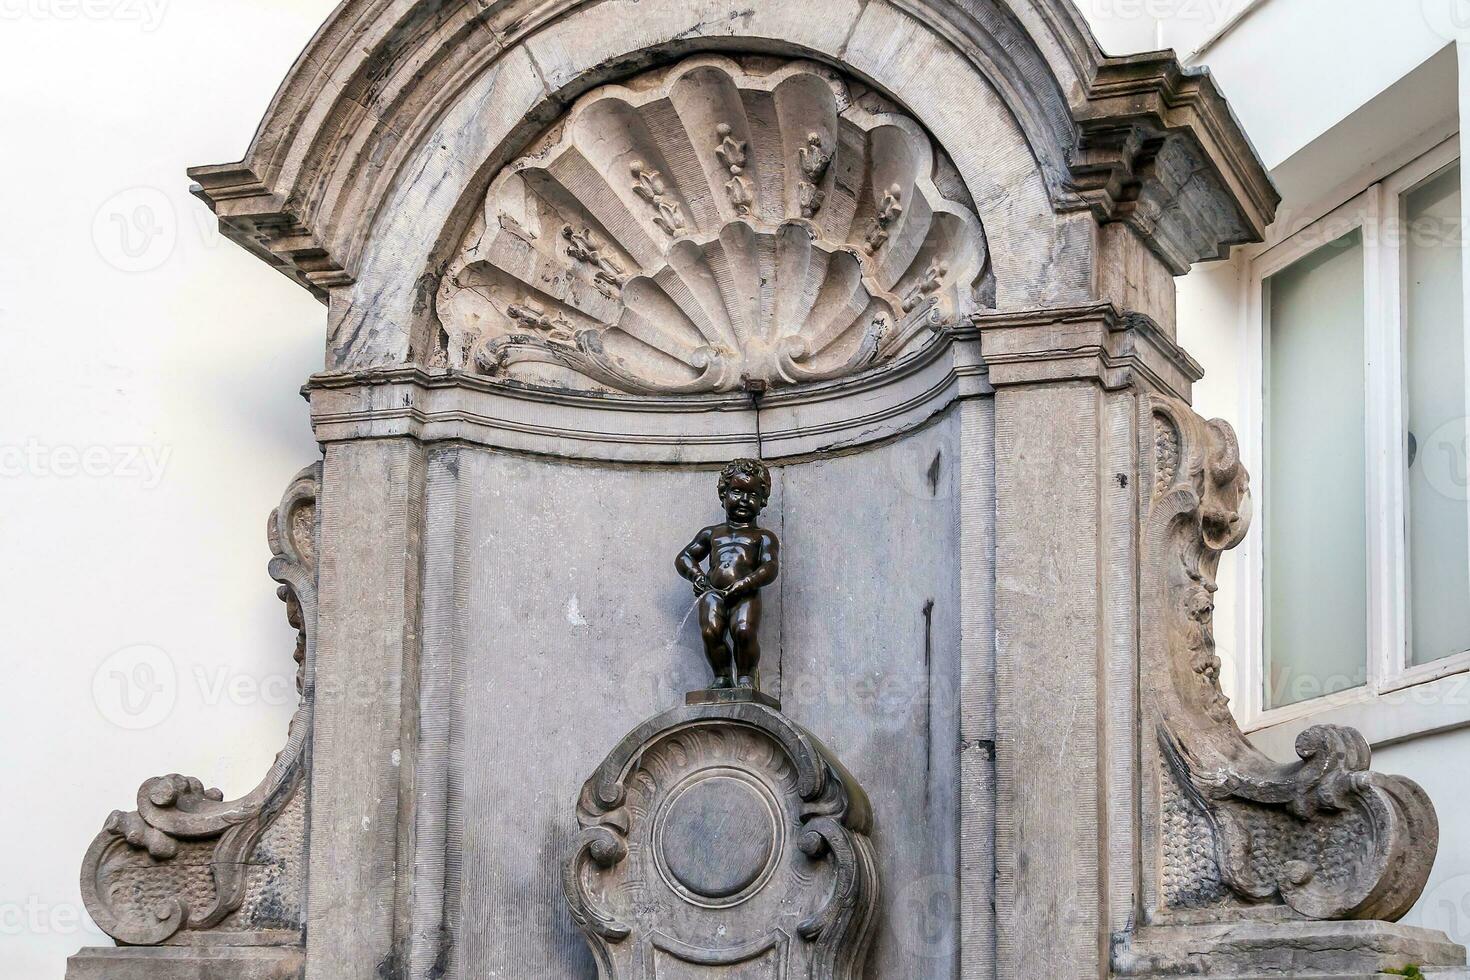 maniquí pis pequeño hombre pipí o le petit julián, un muy famoso bronce escultura punto de referencia en Bruselas foto